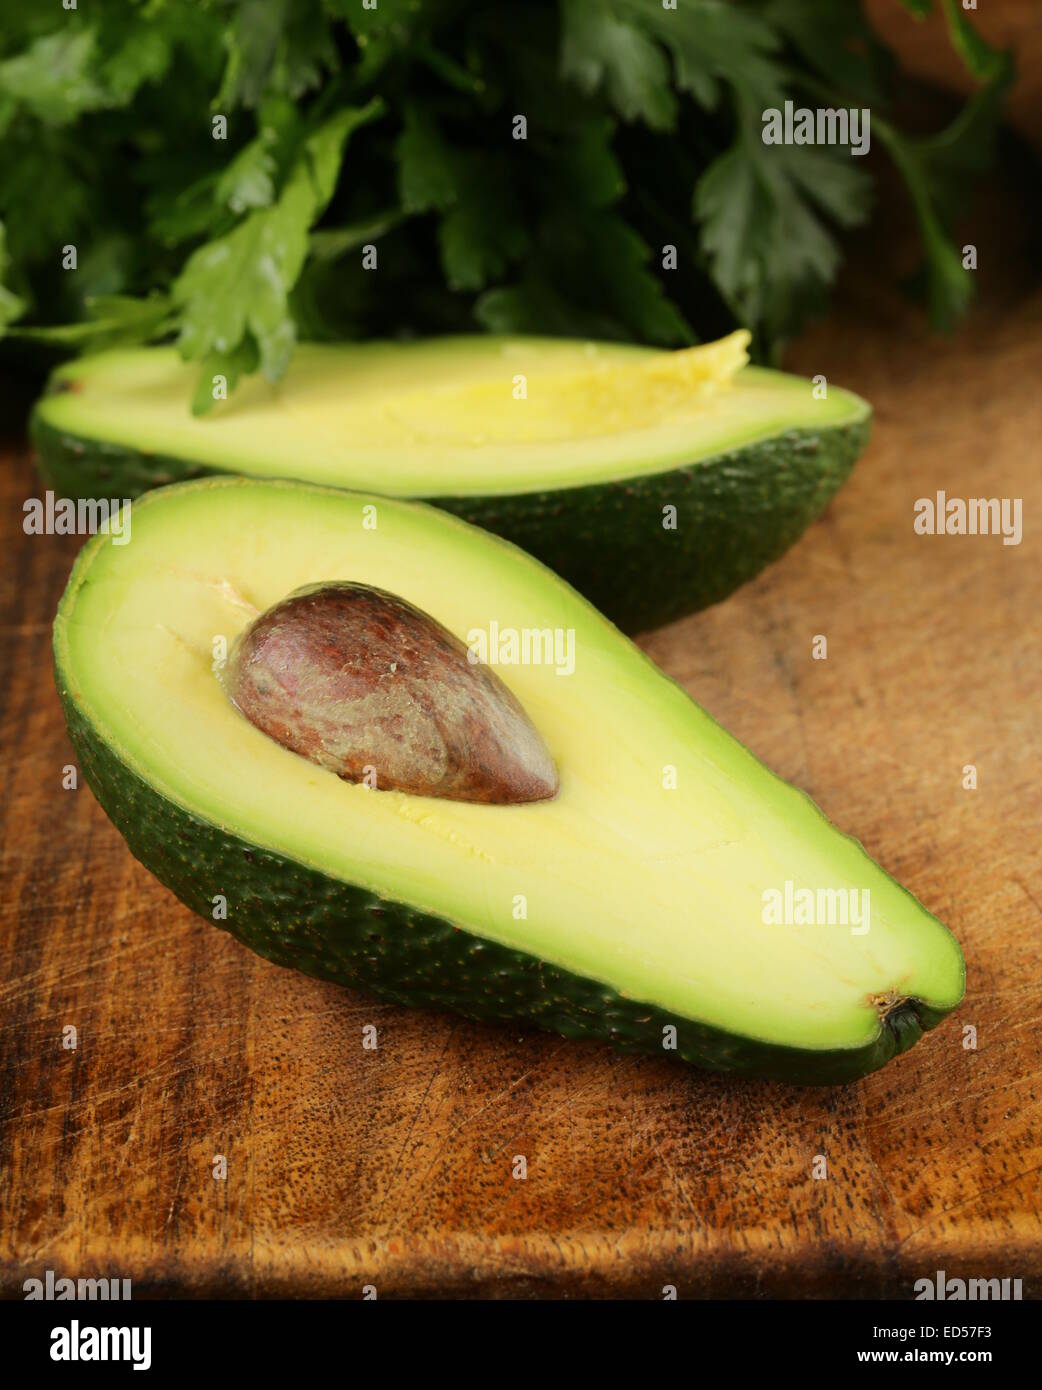 fresh organic ripe avocado on a wooden table Stock Photo